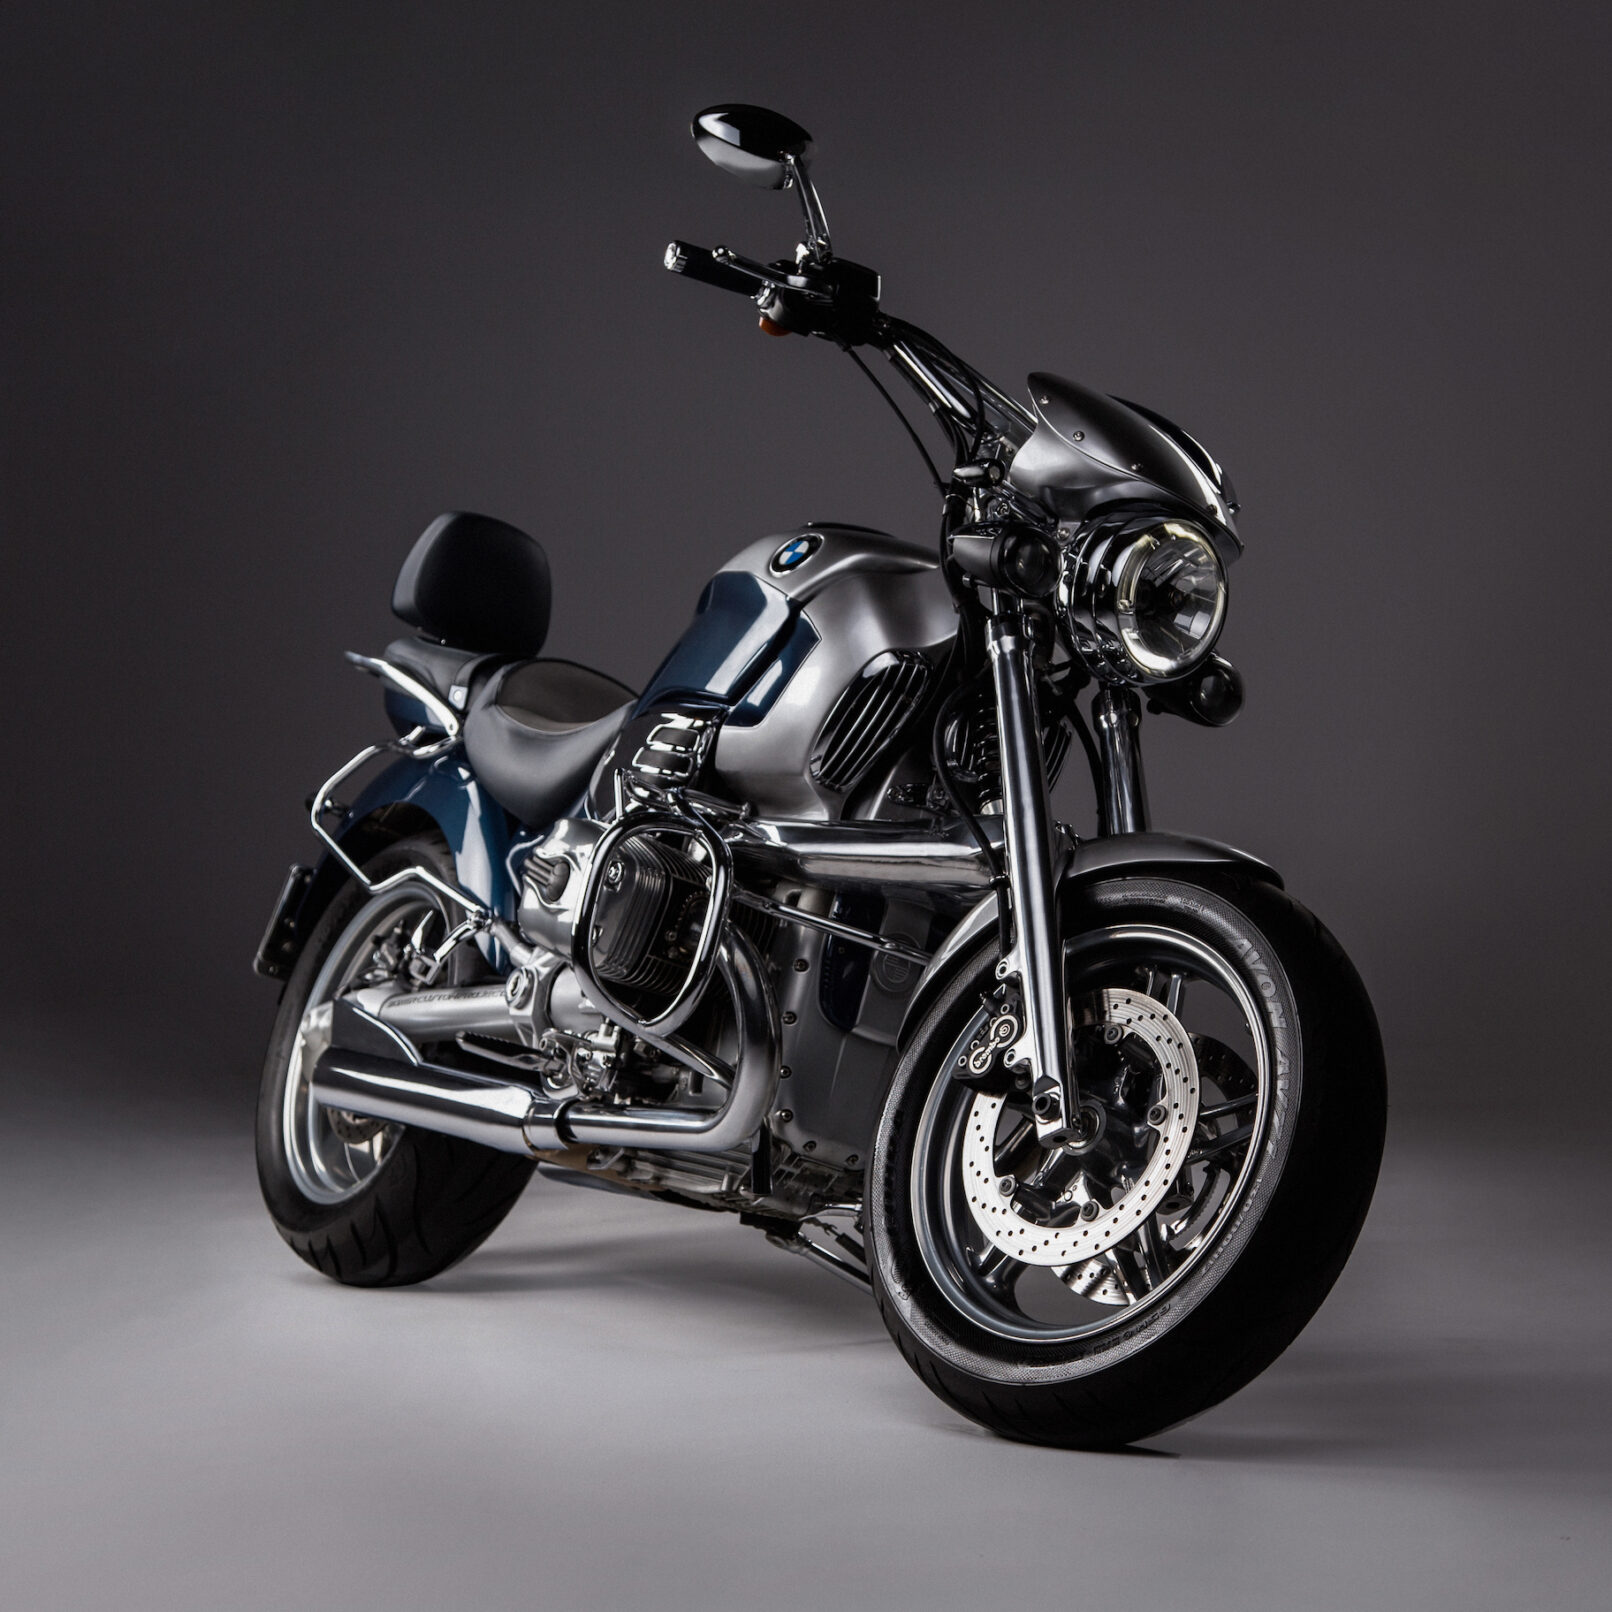 Sesja produktowa motocykla — Boxer Custom Project 5